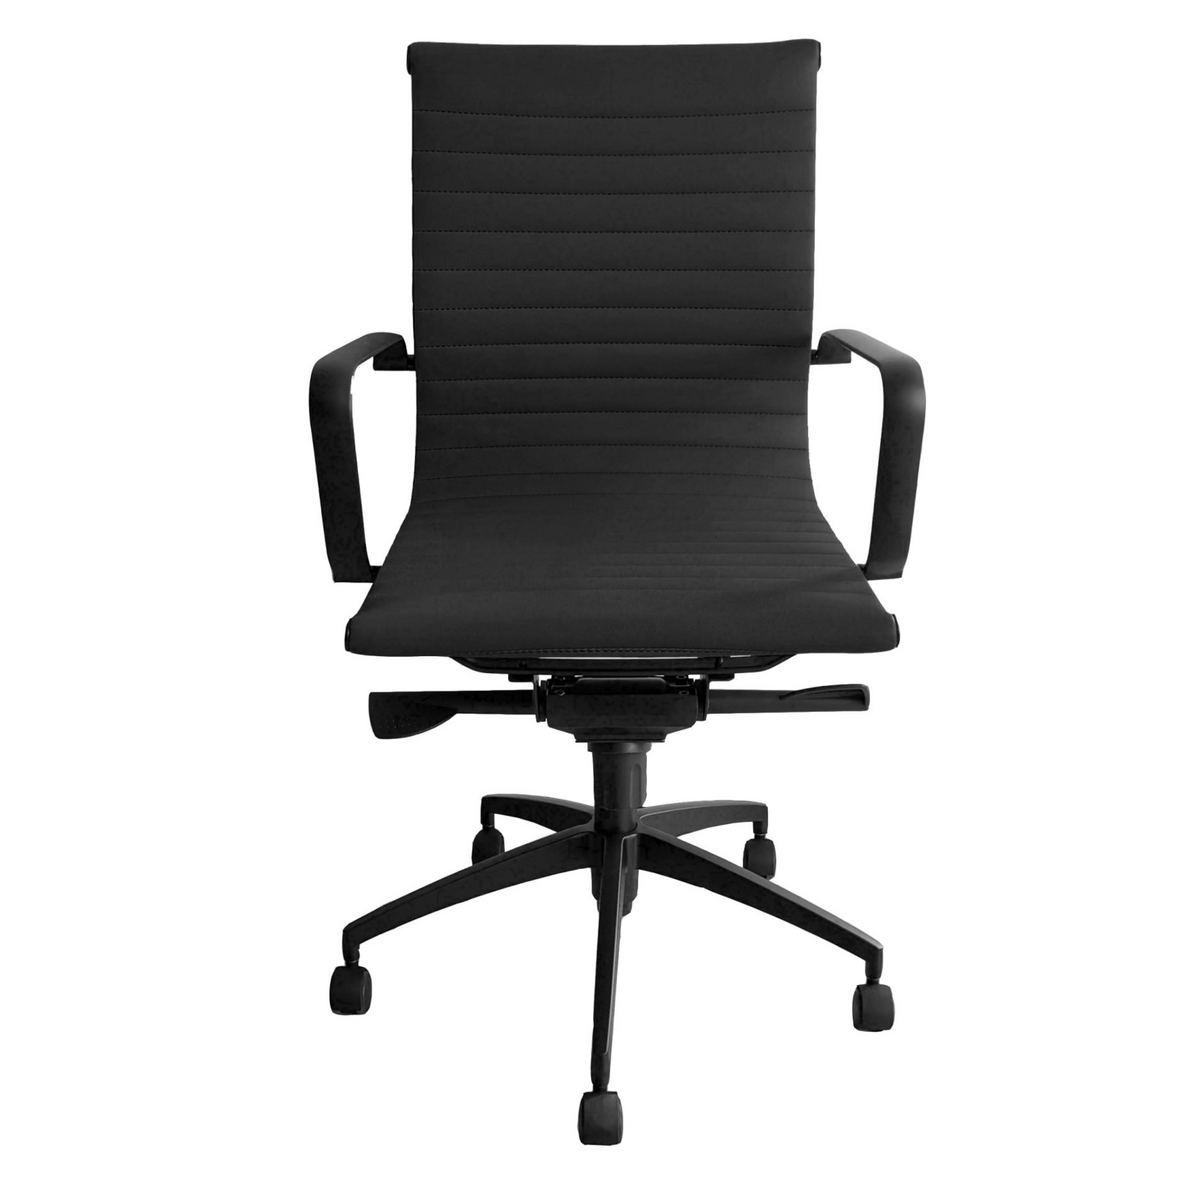 PU605M Executive Chair